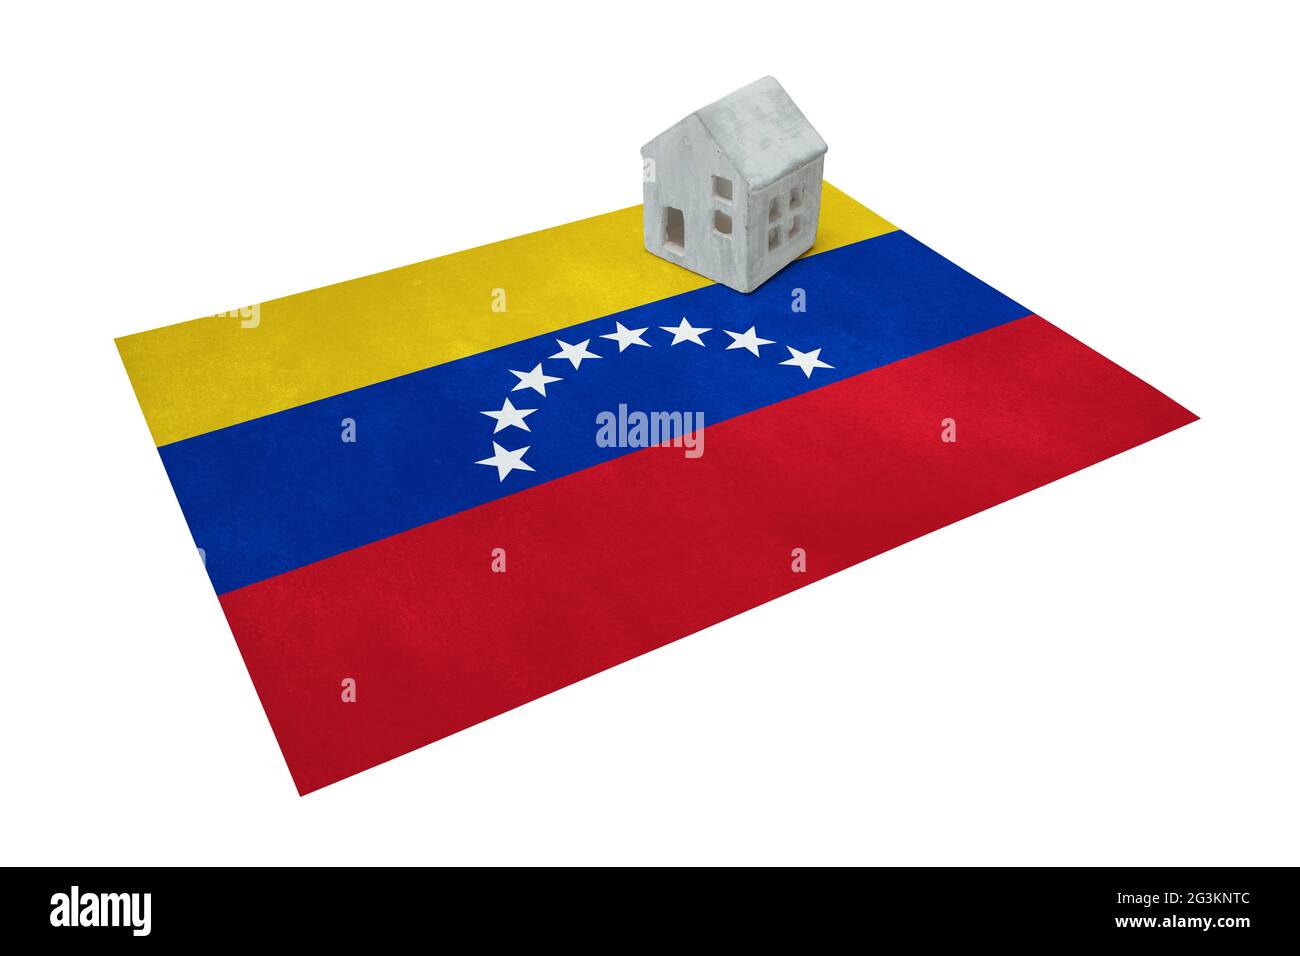 Small house on a flag - Venezuela Stock Photo